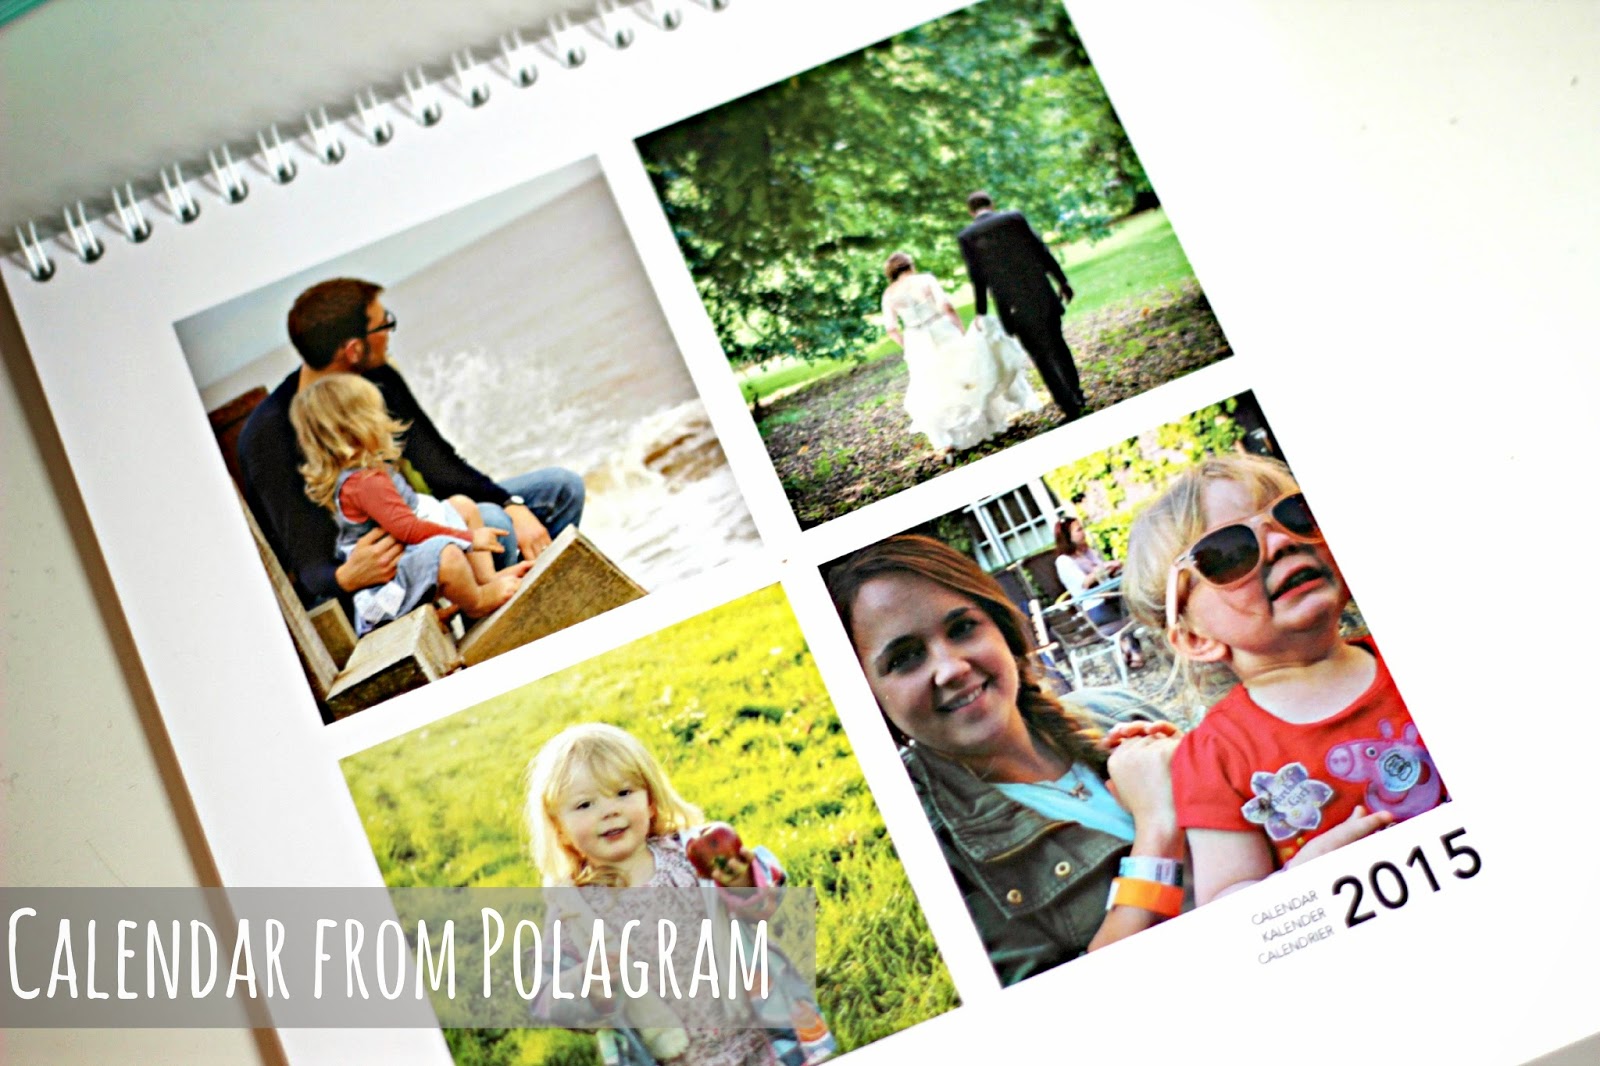 Calendar from polagram using instagram pictures